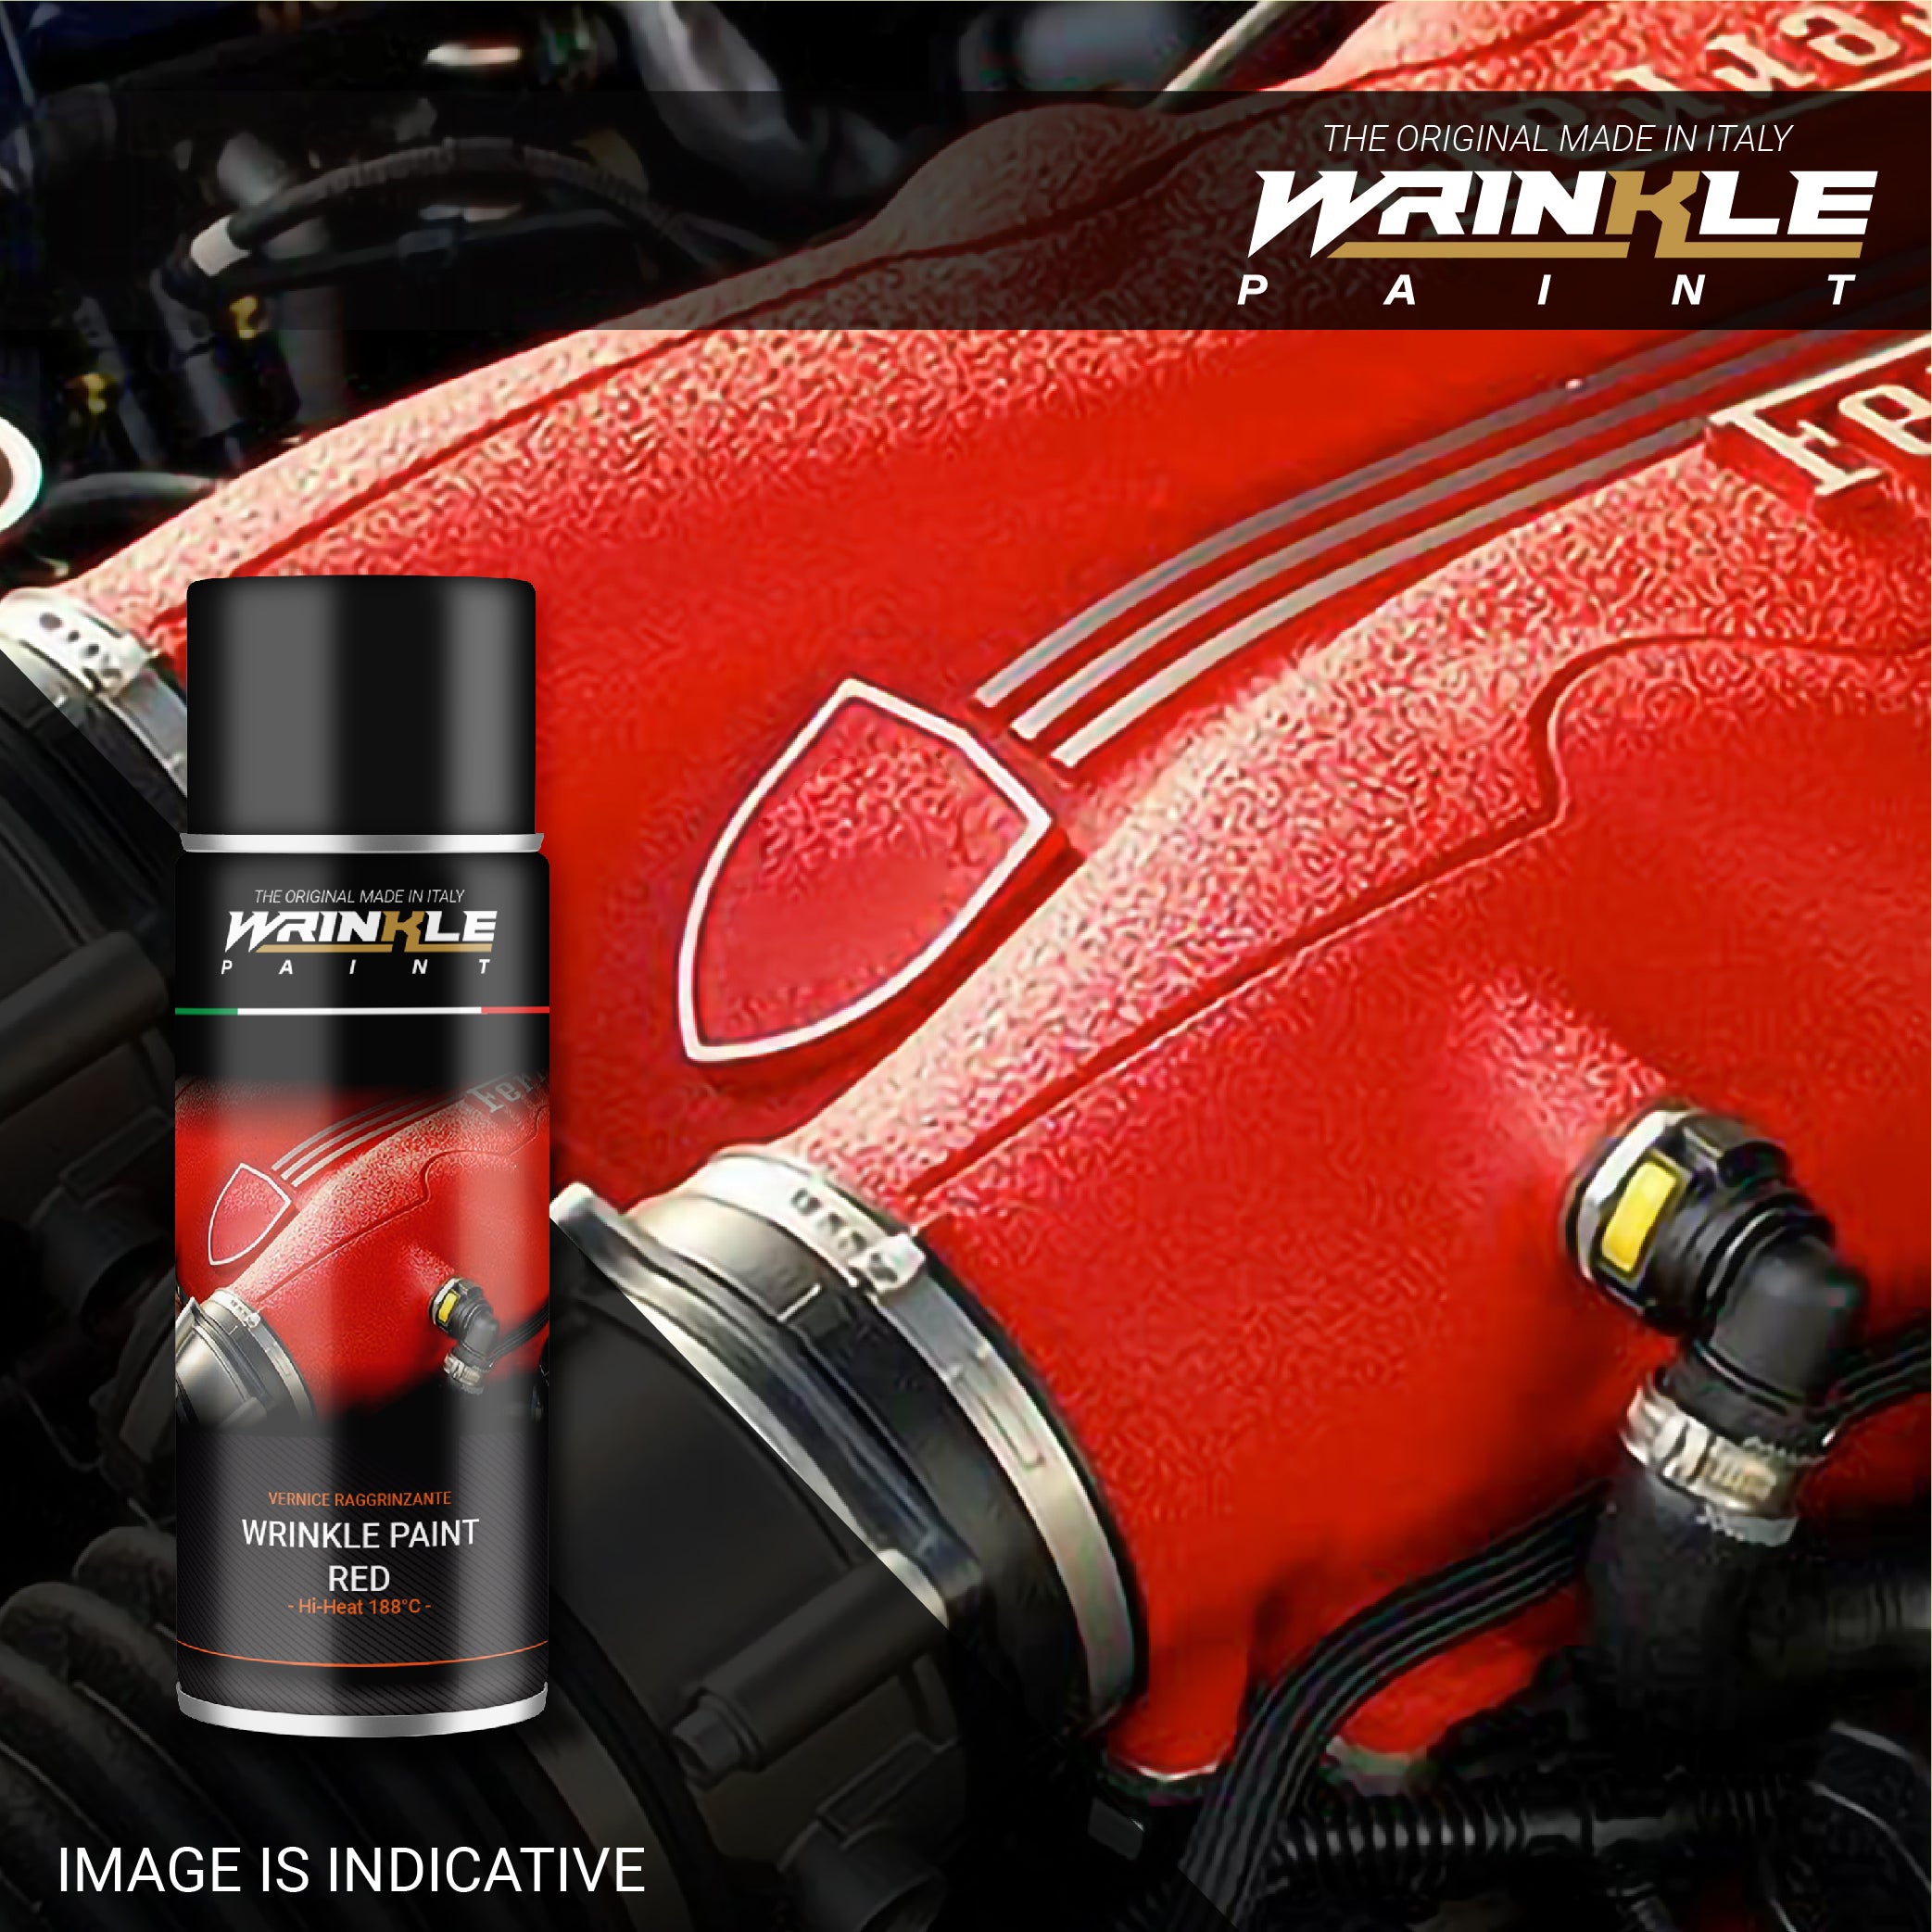 Wrinkle Paint Spray RED MASERATI Engine High Heat - 400 ml